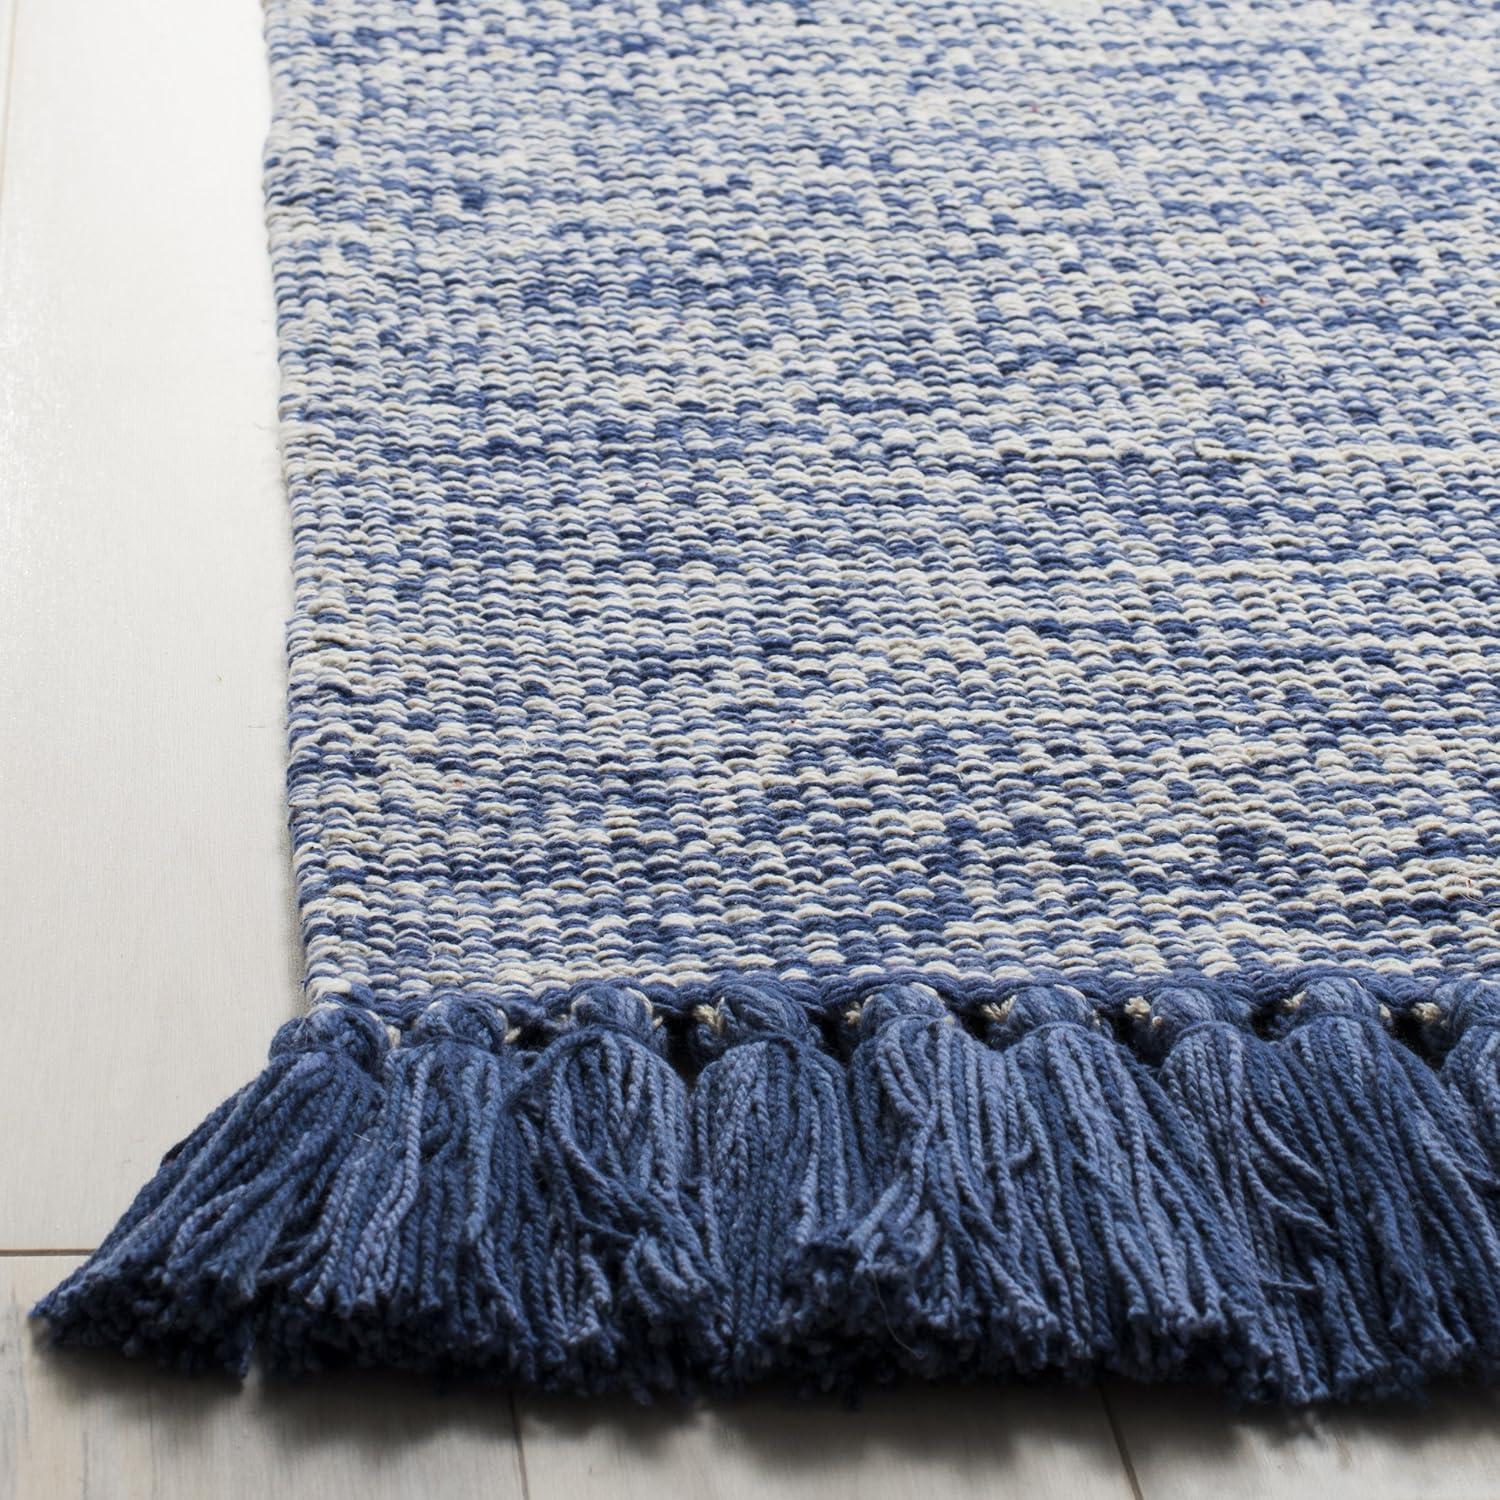 Coastal Breeze Blue Handwoven Cotton 5' x 8' Area Rug